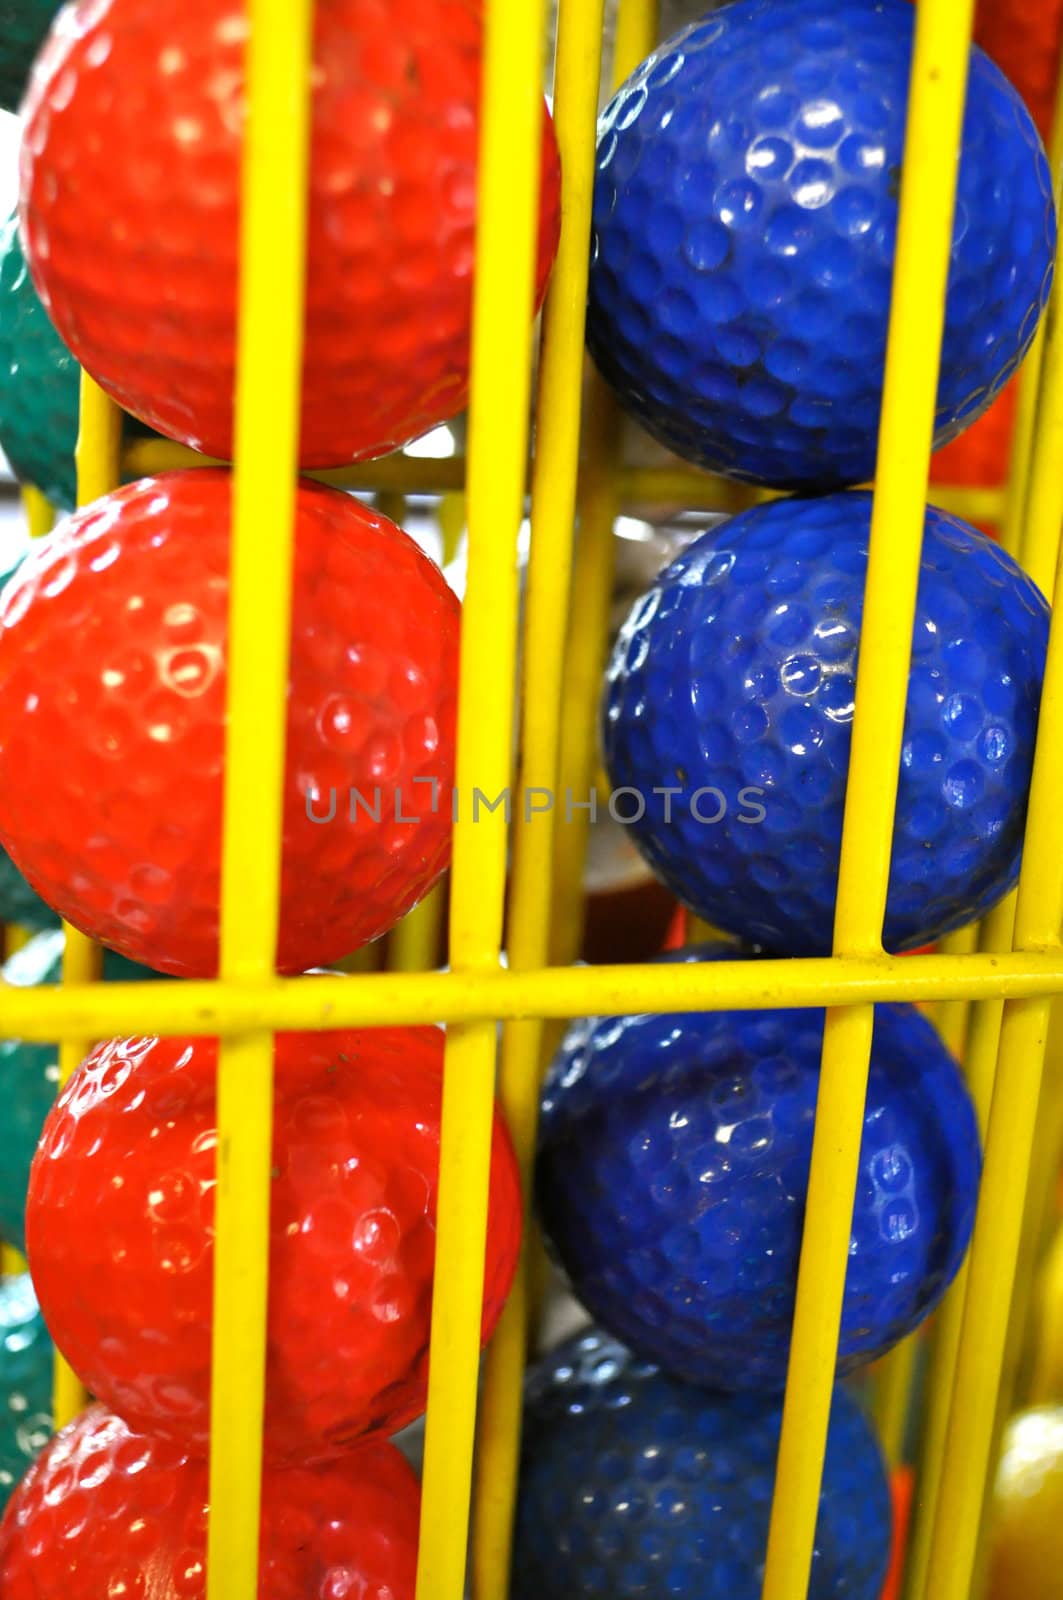 Golf balls by RefocusPhoto